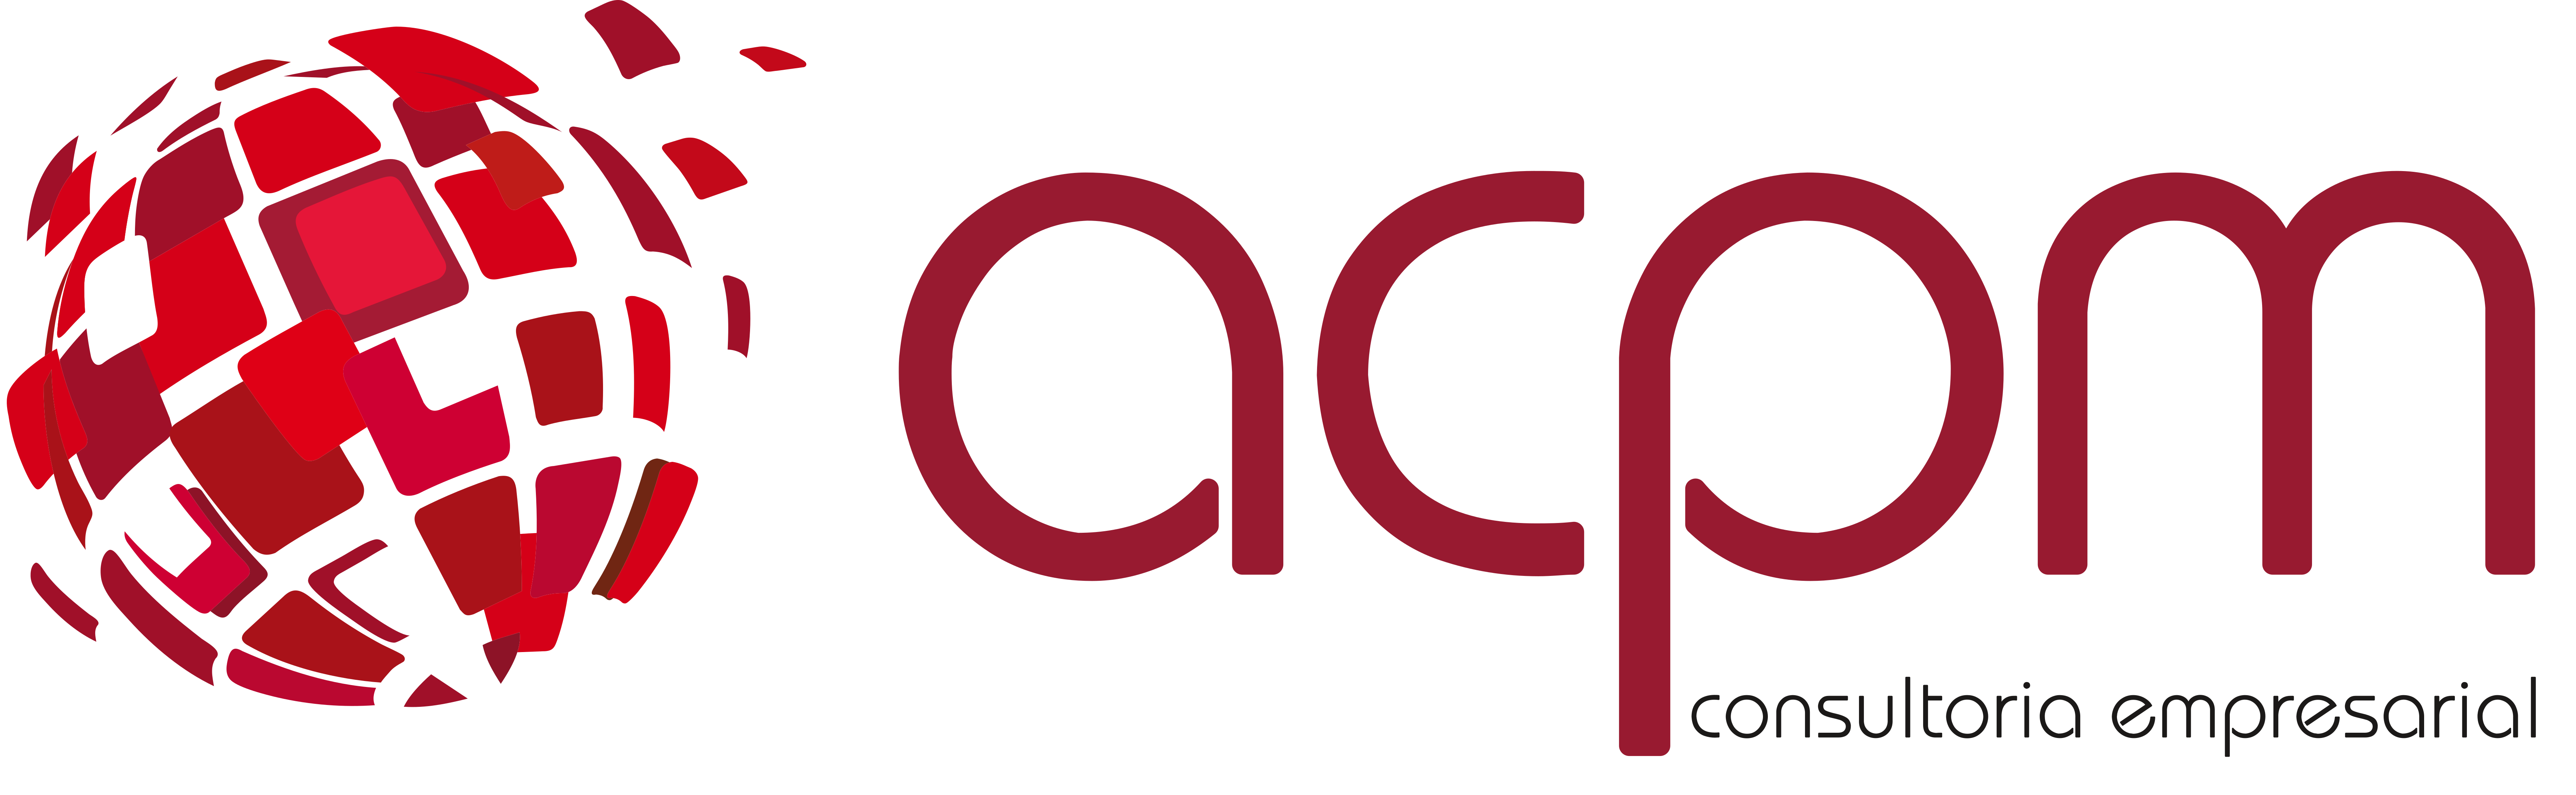 ACPM Logo